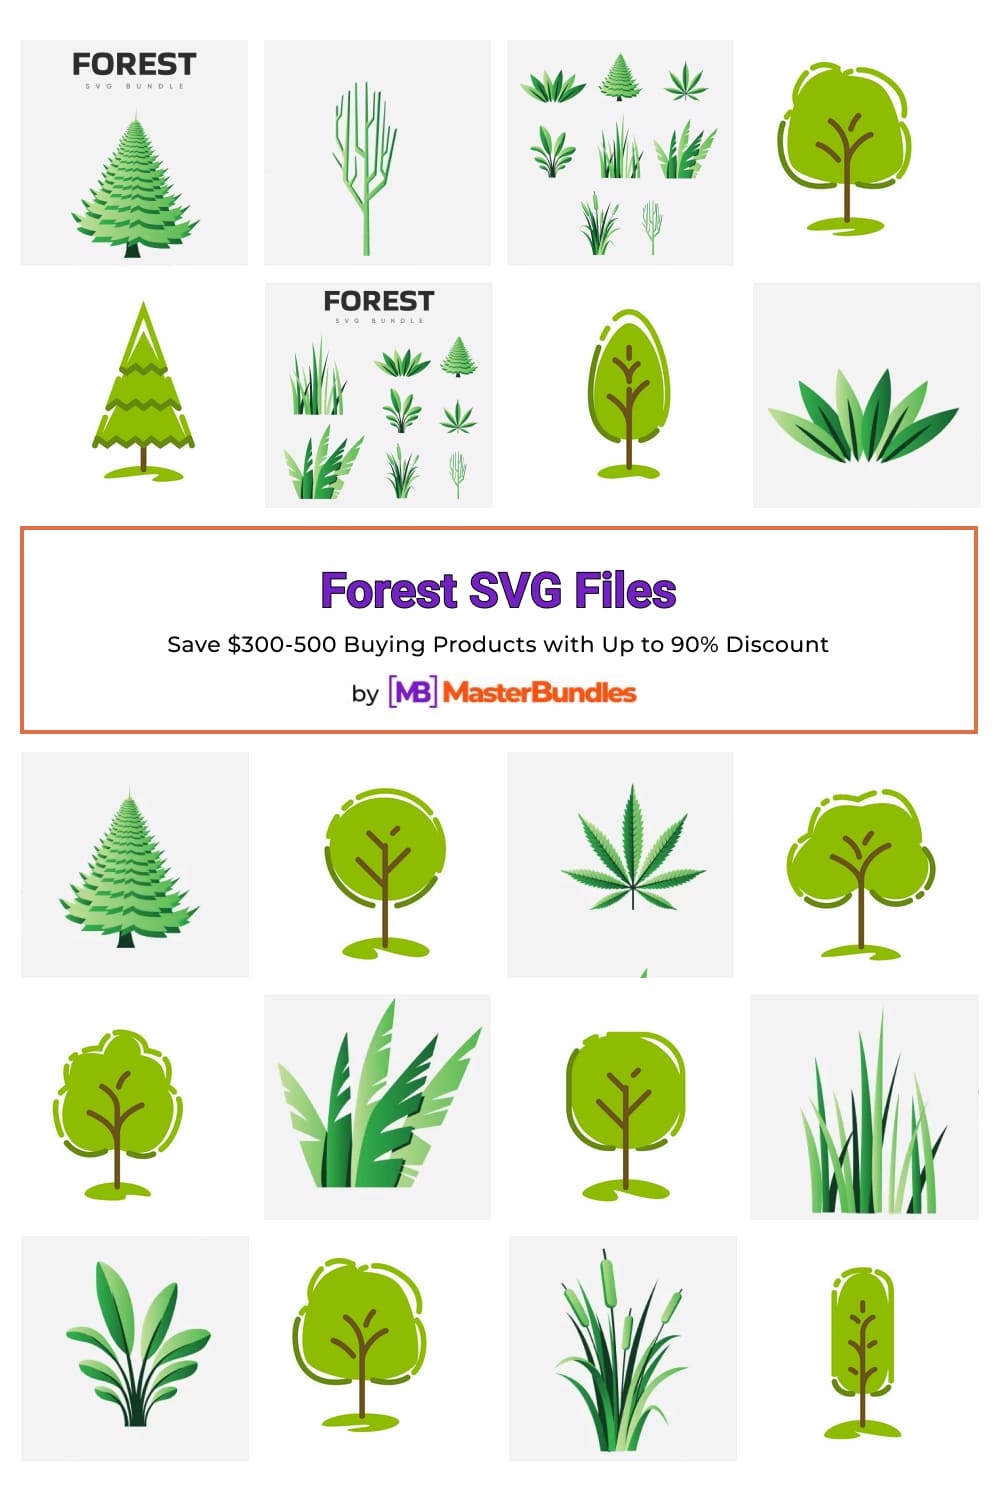 Forest SVG Files for pinterest.